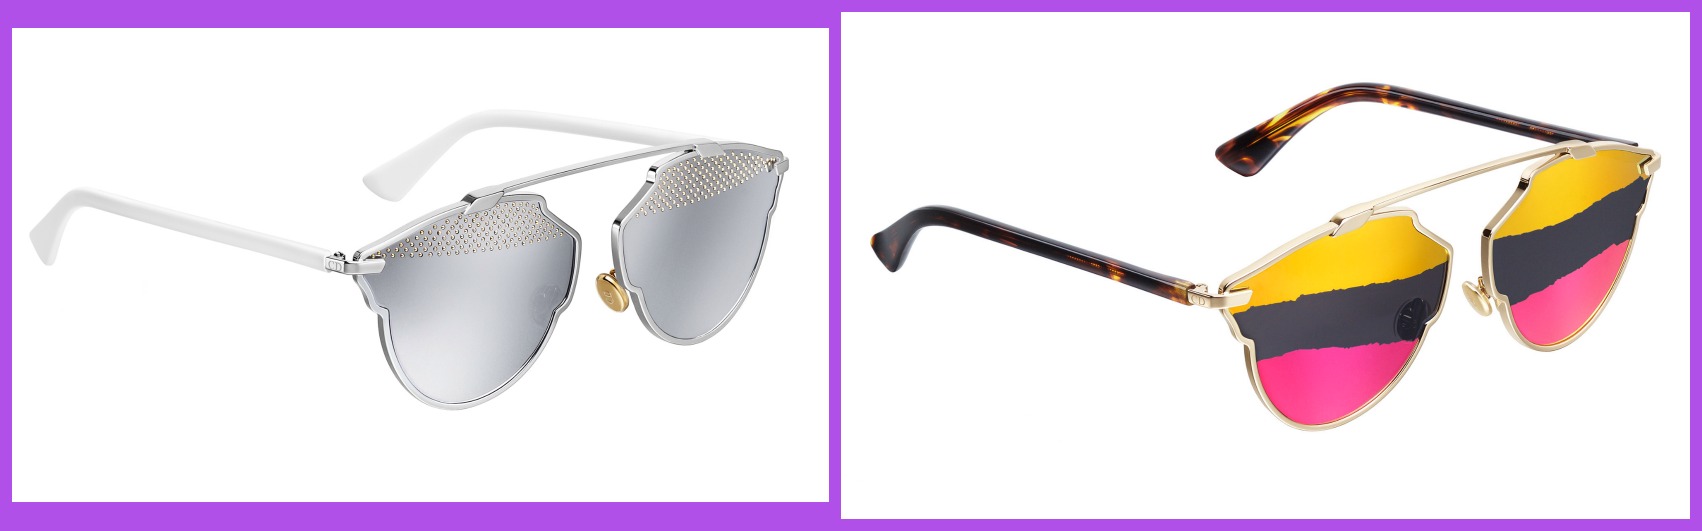 dior-so-real-sunglasses-collage-2